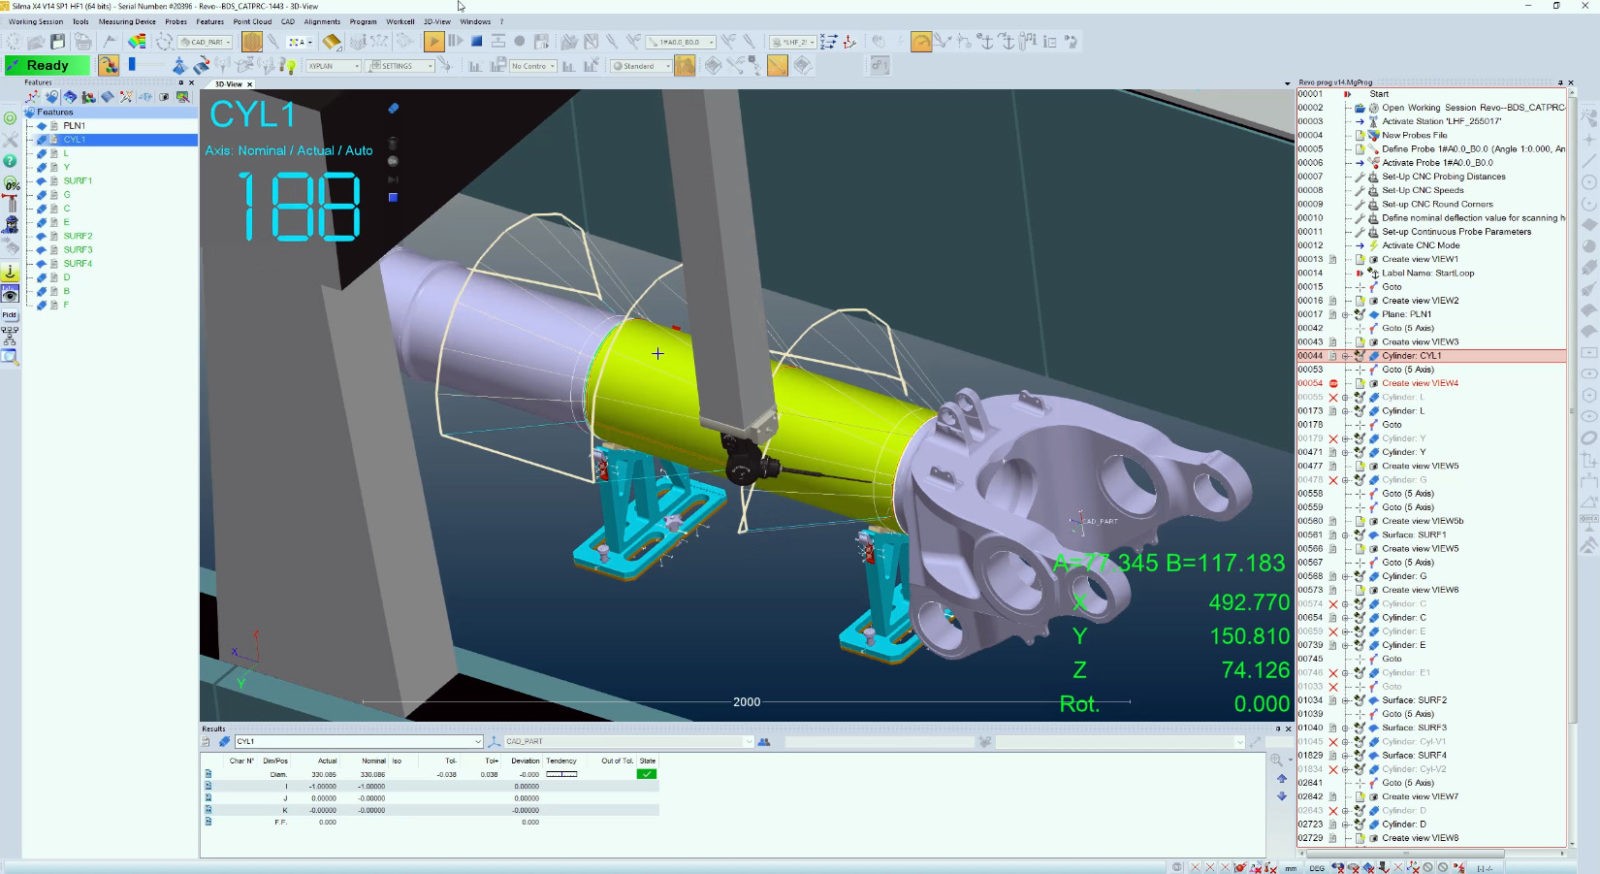 3D Inspection is modernizing at Safran with Metrolog 3